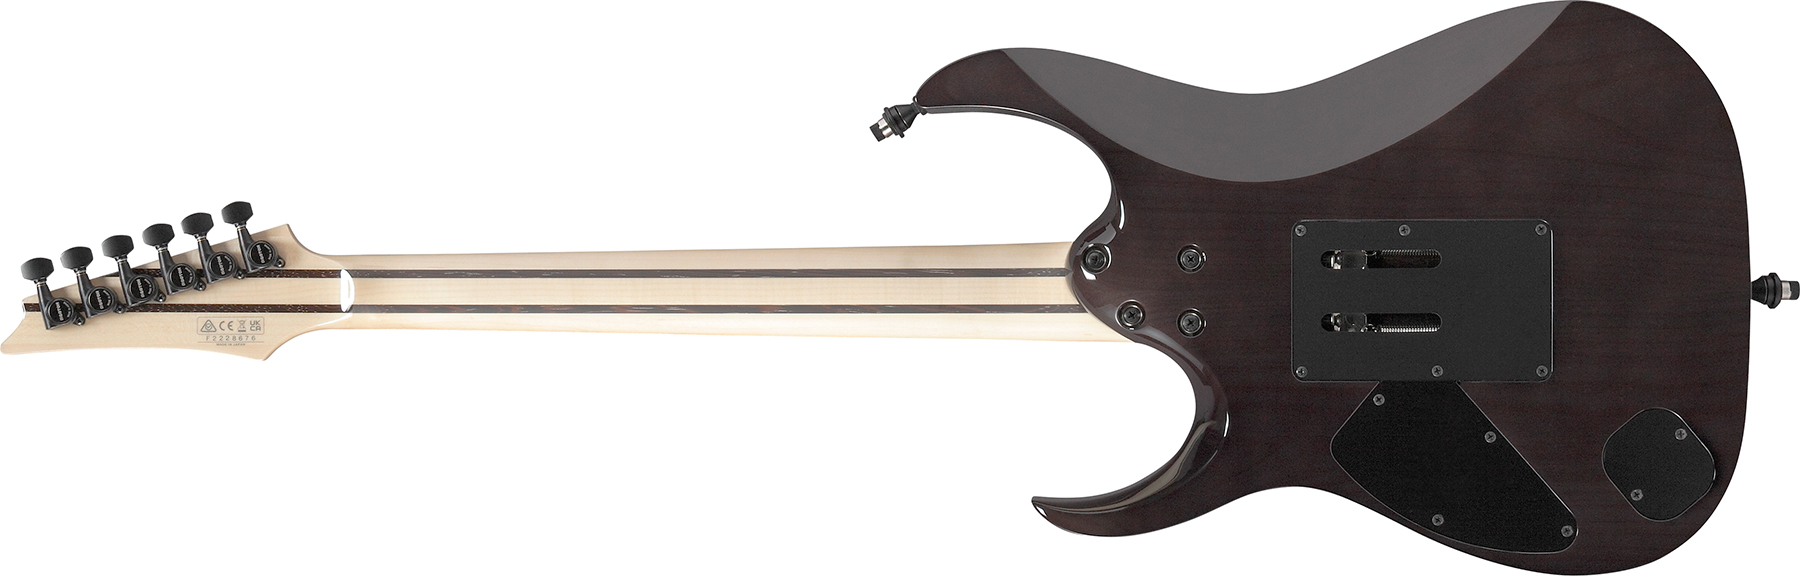 Ibanez Rg8870 Bre J.custom Jap Hsh Dimarzio Fr Eb - Black Rutile - Guitarra eléctrica con forma de str. - Variation 1